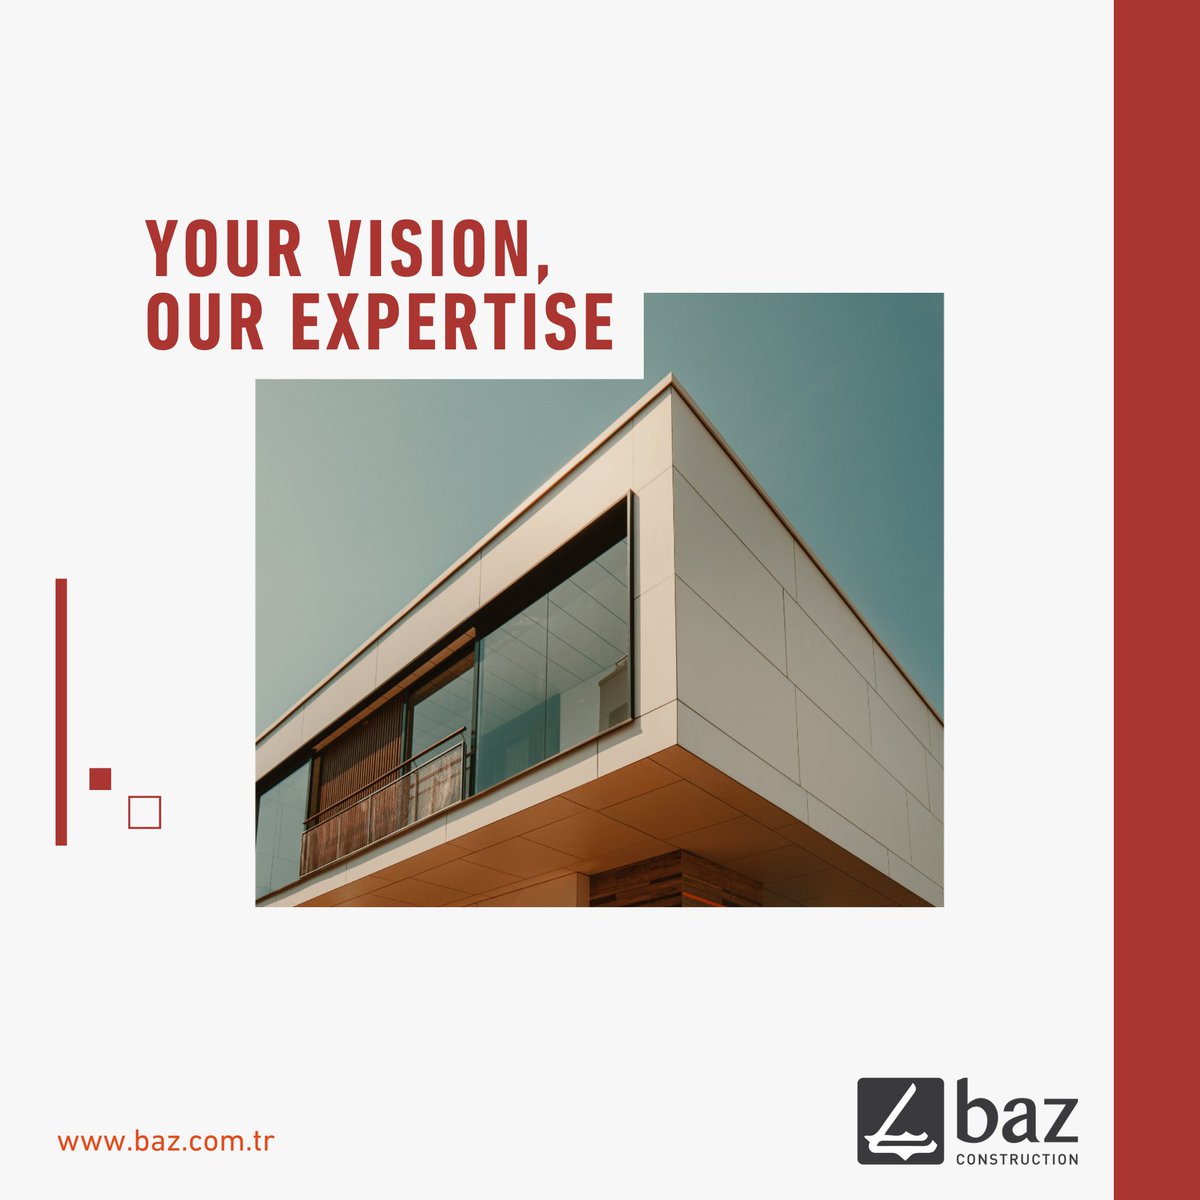 Your Vision, Our Expertise...

#BazConstruction #BazAcademy #CivilEngineering #build #construction #ConstructionTechnology #ConstructionTrends #inşaat #inşaatsektörü #inşaatmühendisi #architecture